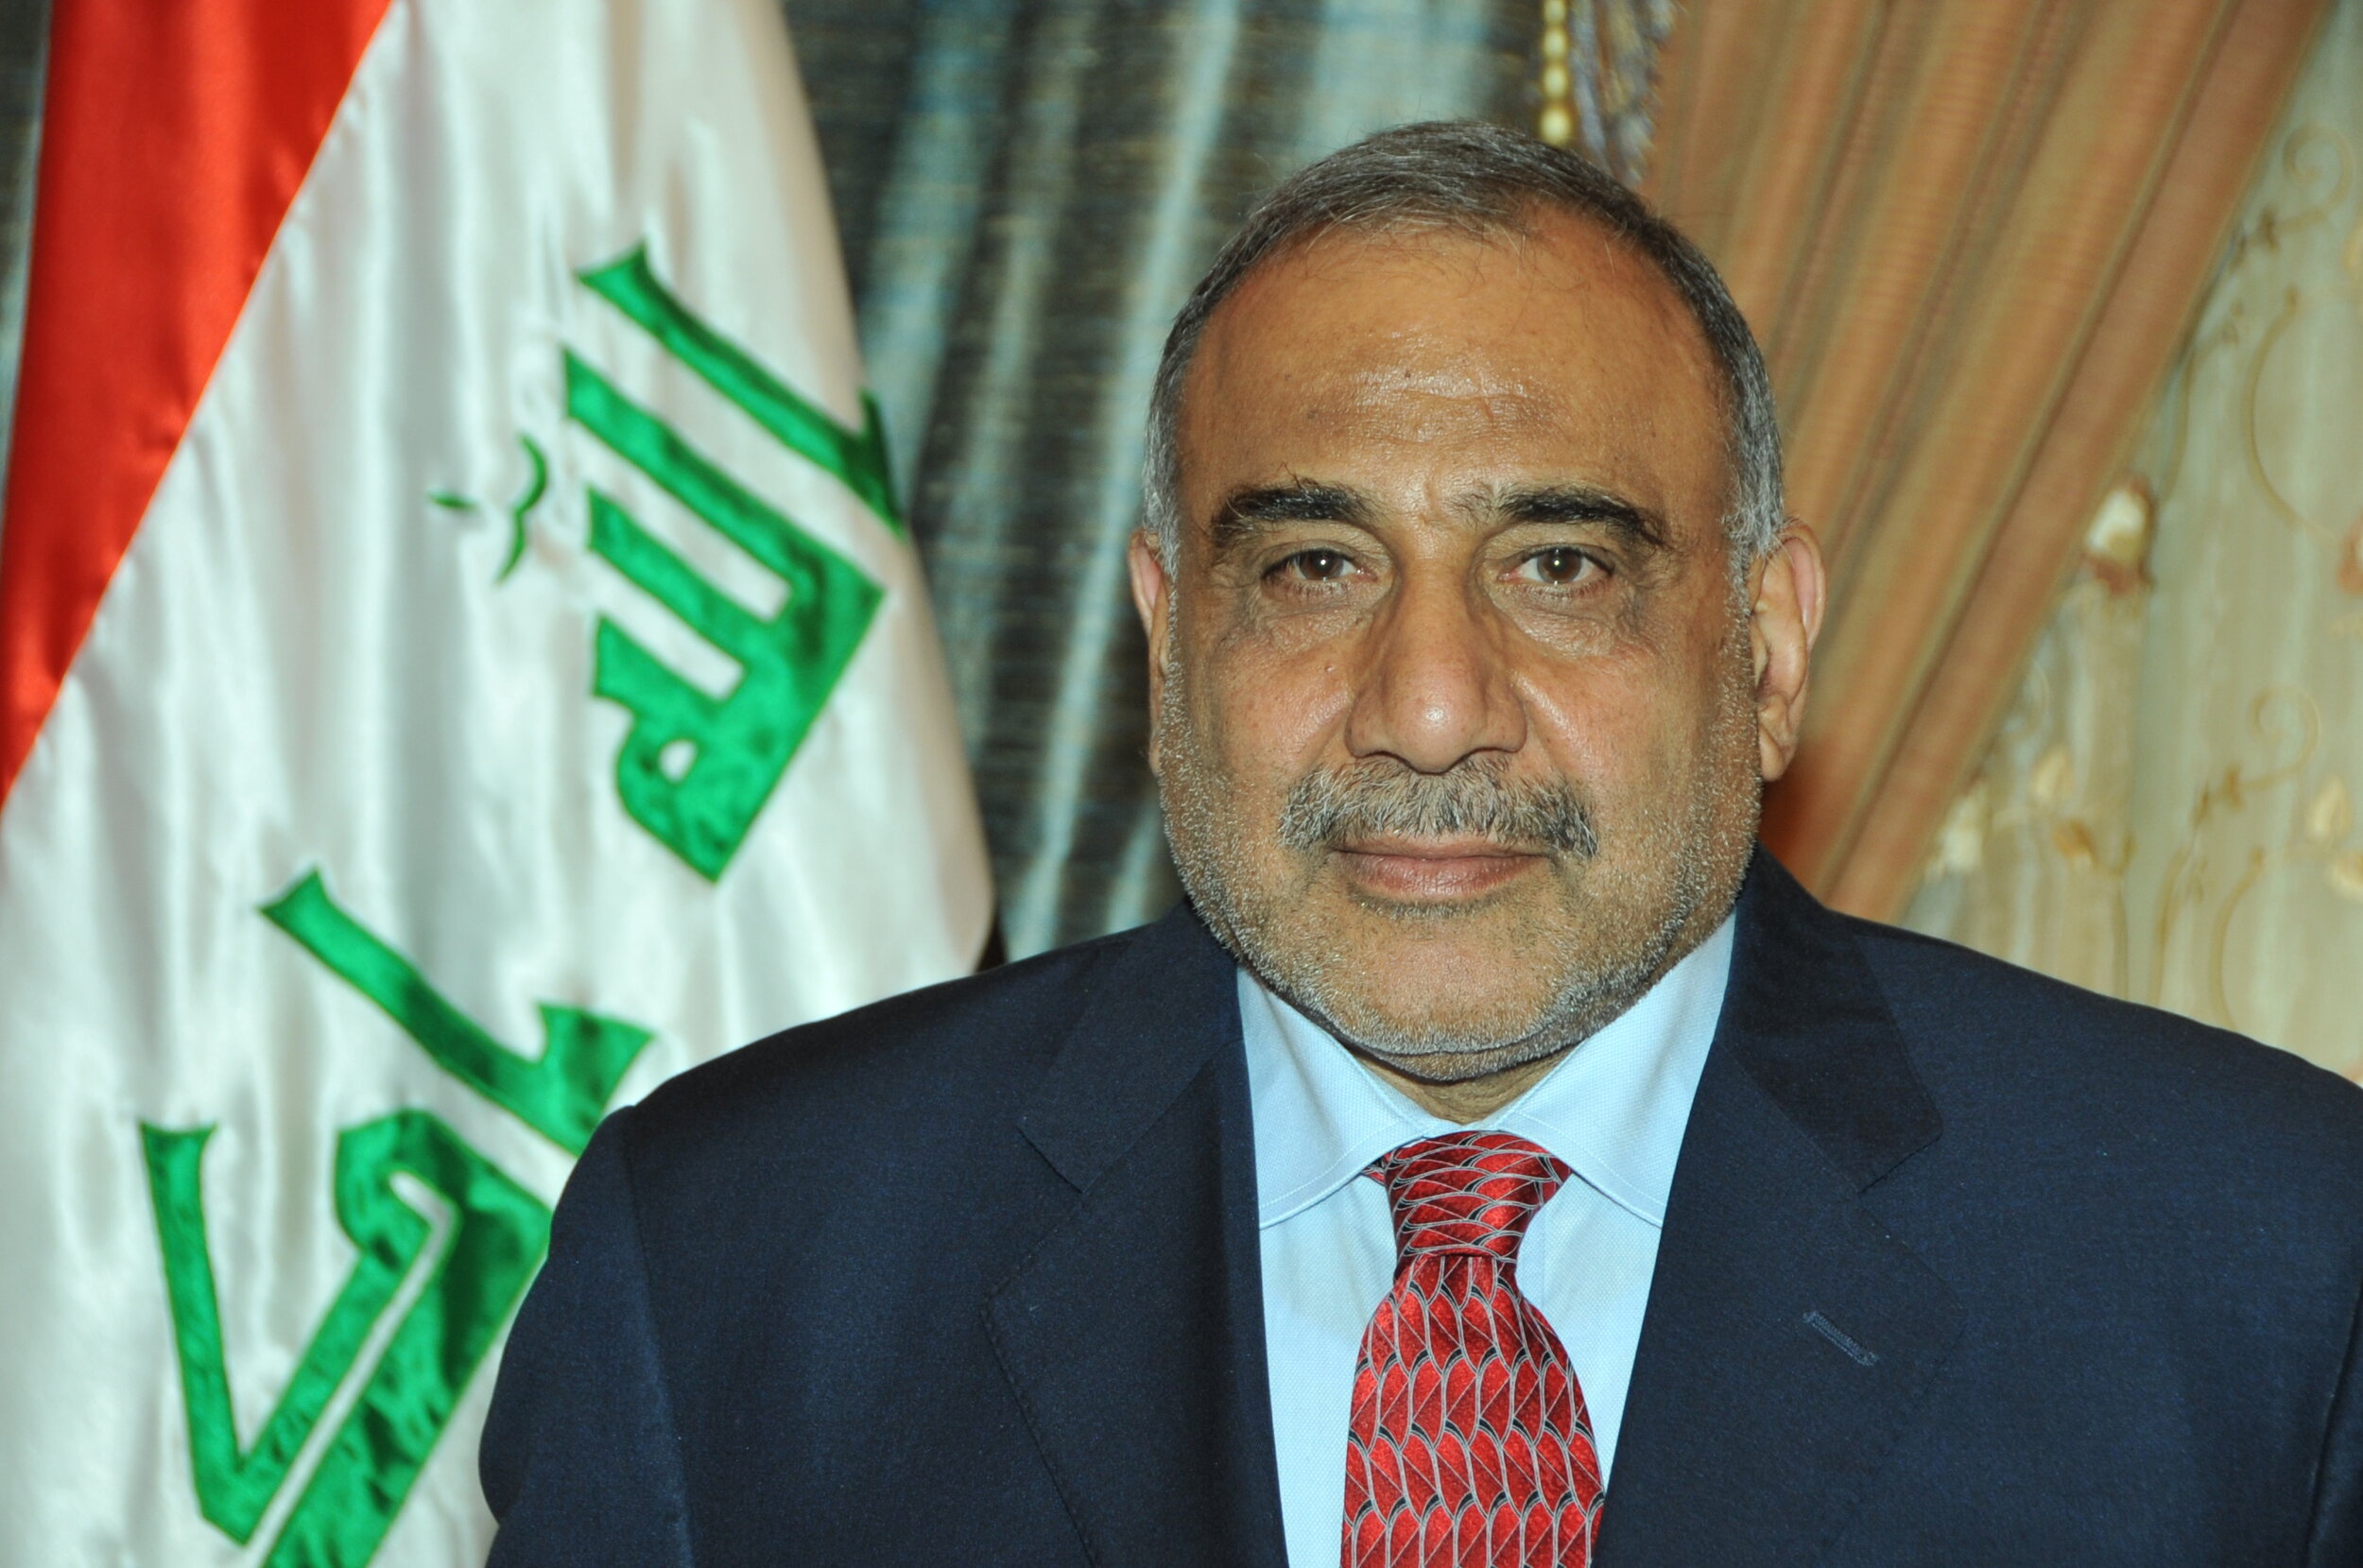 PICTURED: Current Iraqi PM Adel Abdul Mahdi. Photo credit LaGrandeOurs, retrieved from Wikimedia. CC. 3.0